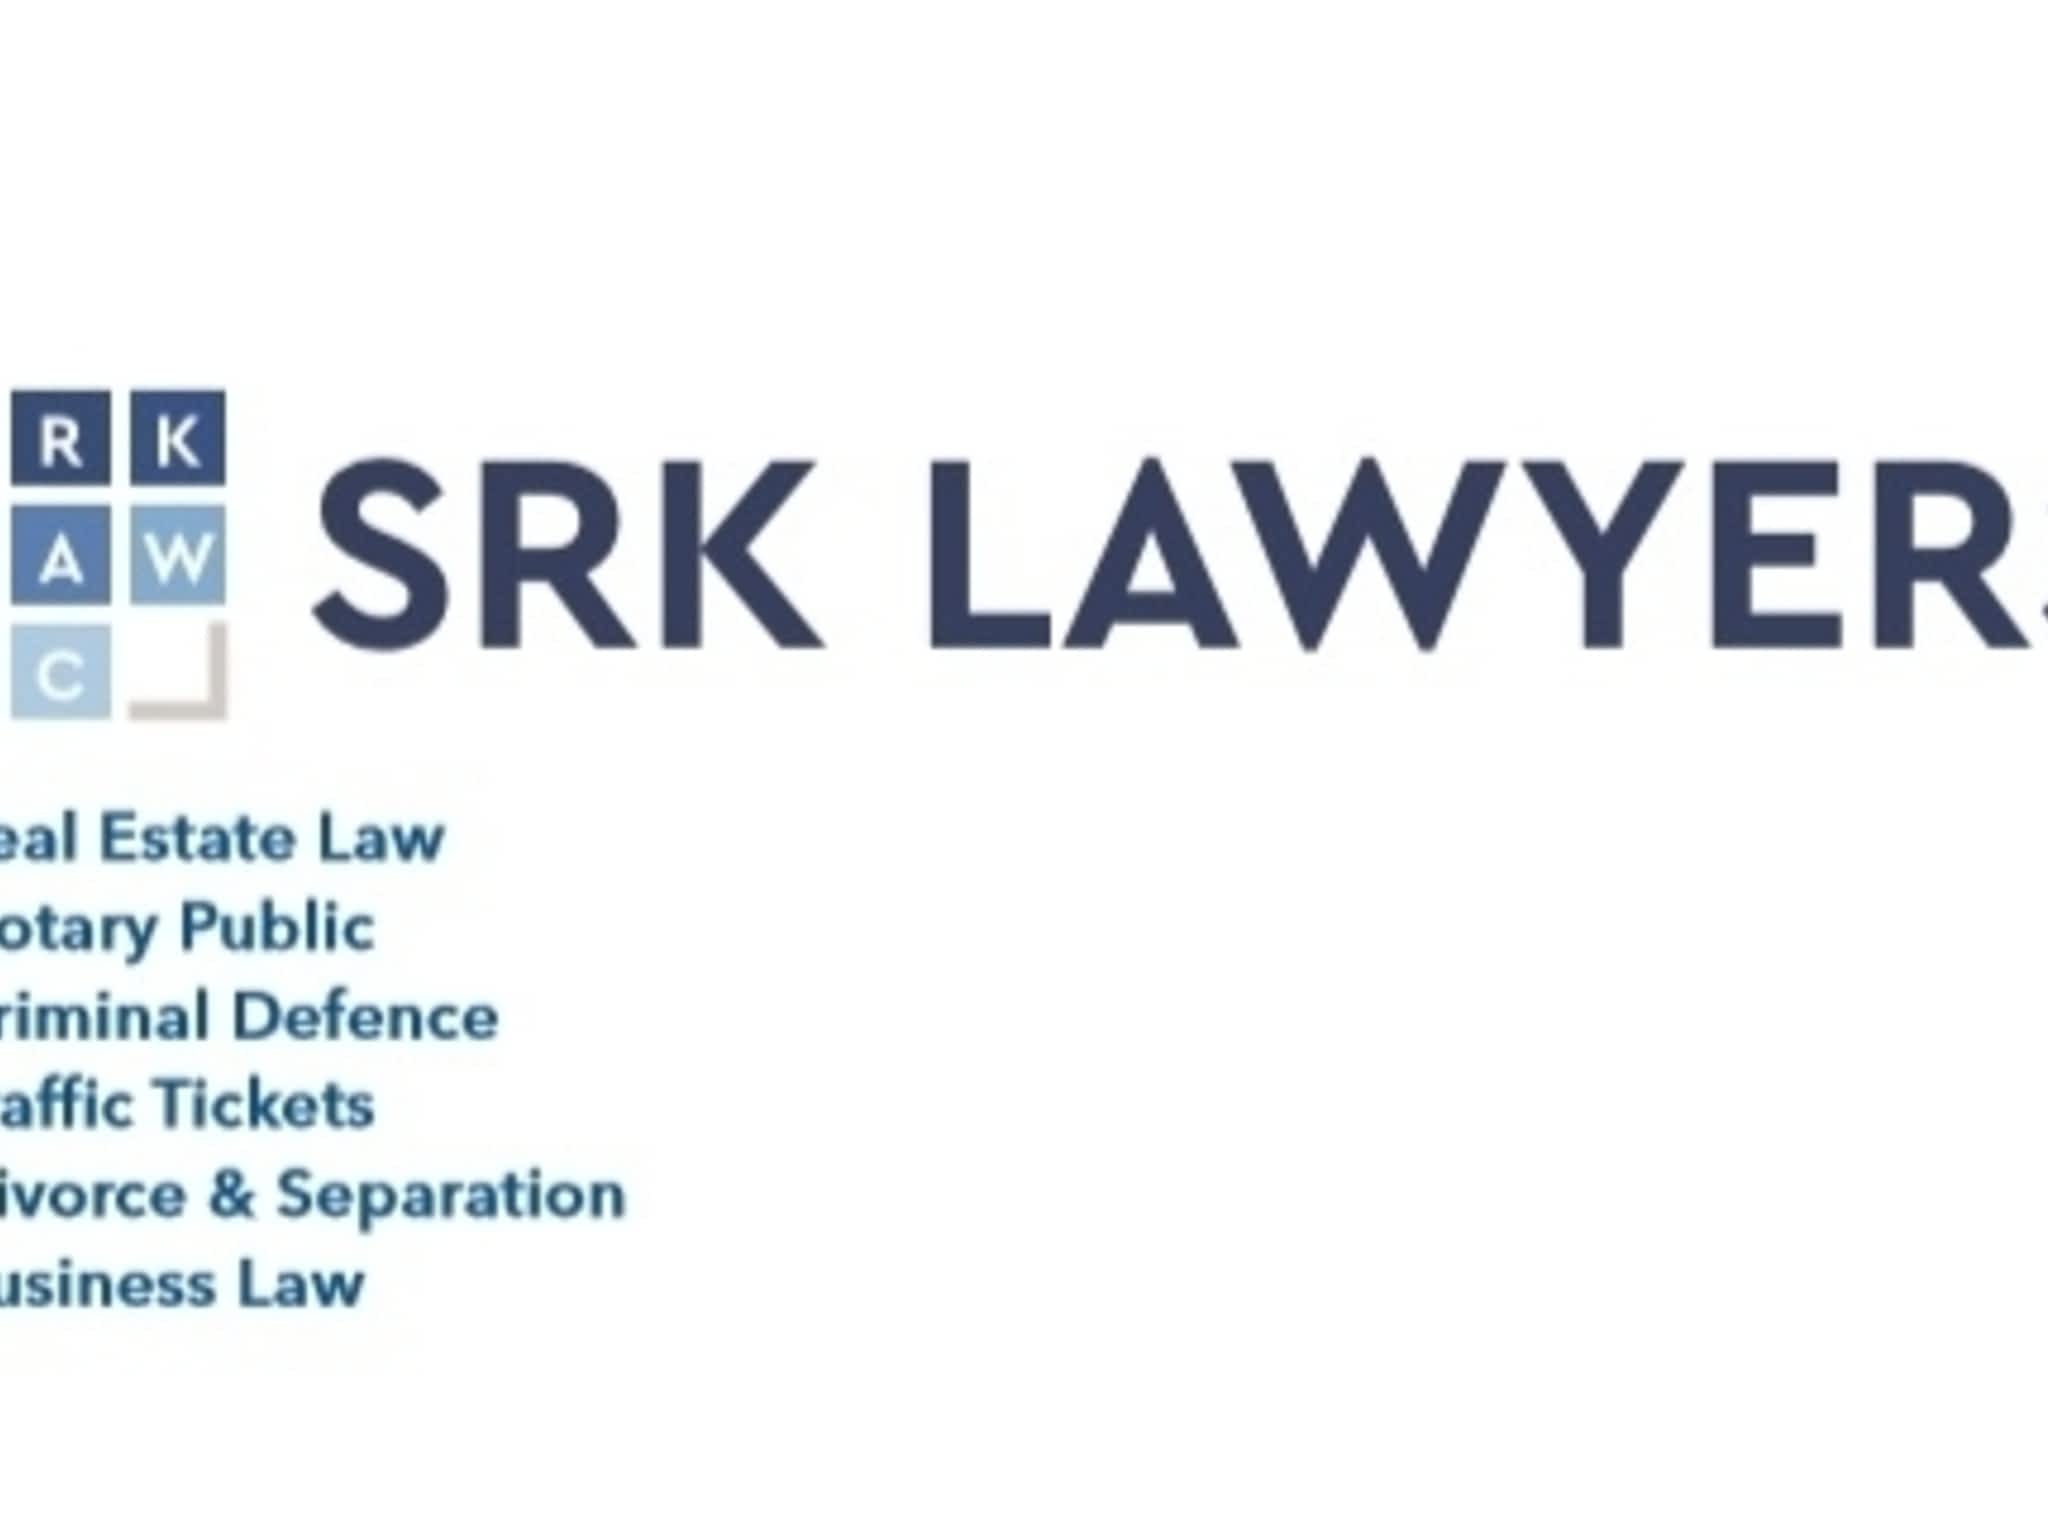 photo SRK Lawyers - Queensway